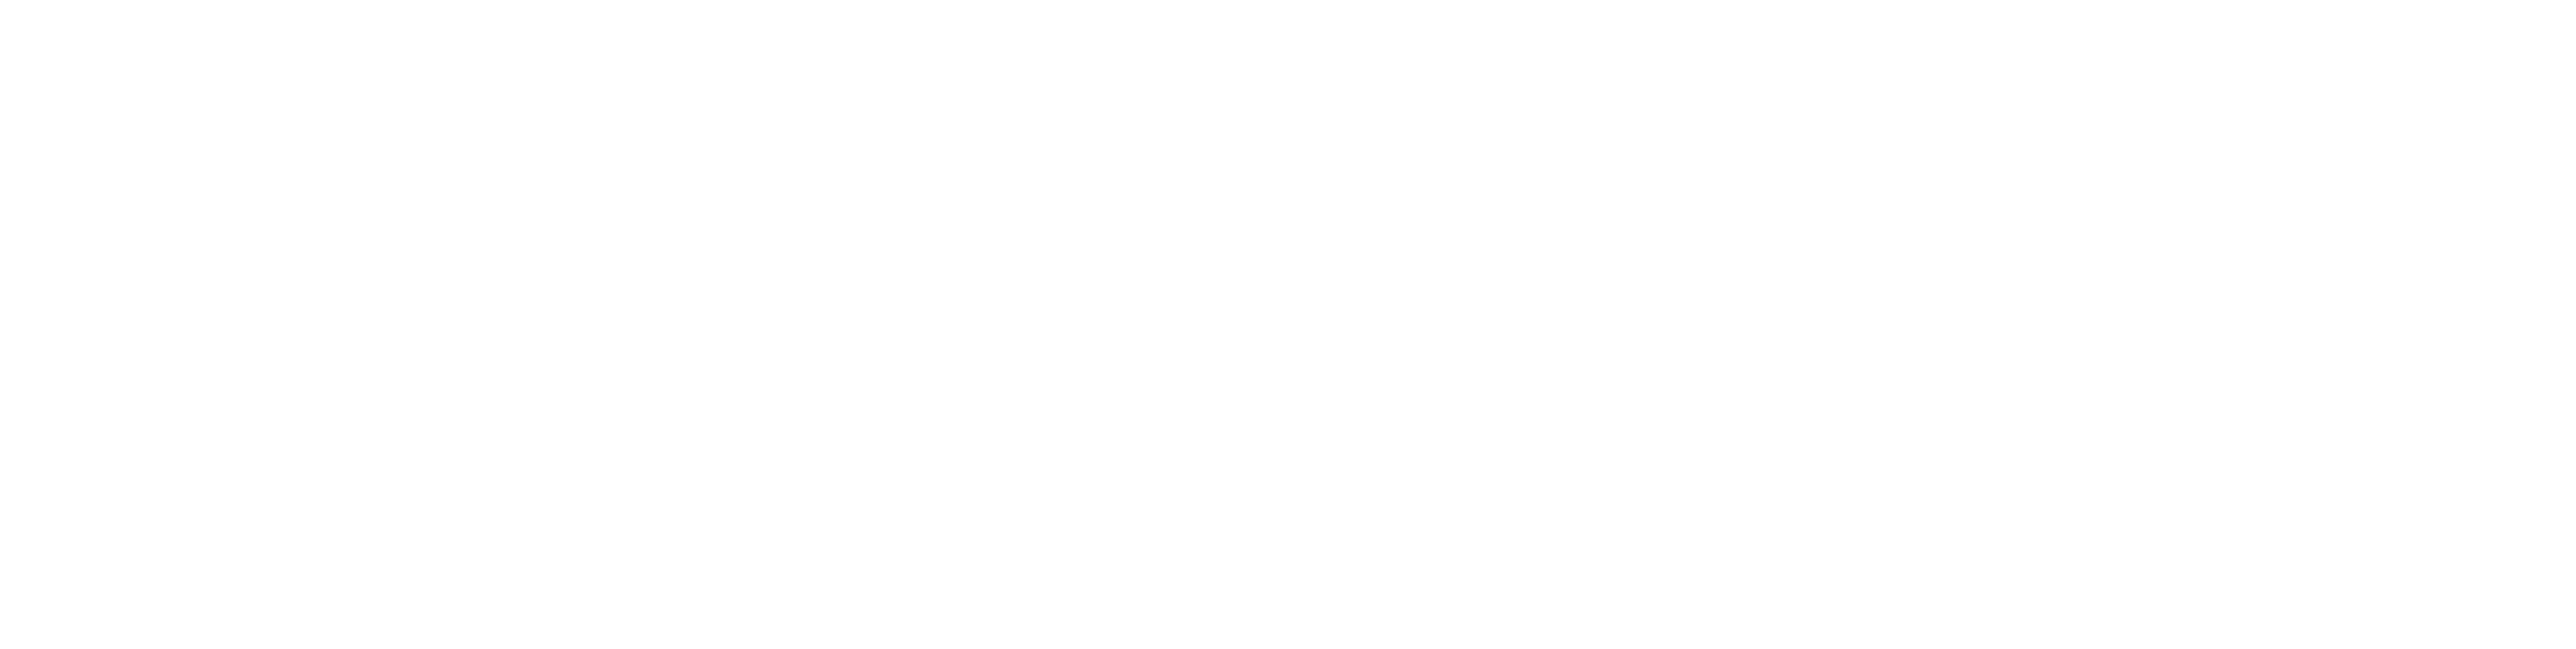 Forbes logo (1)